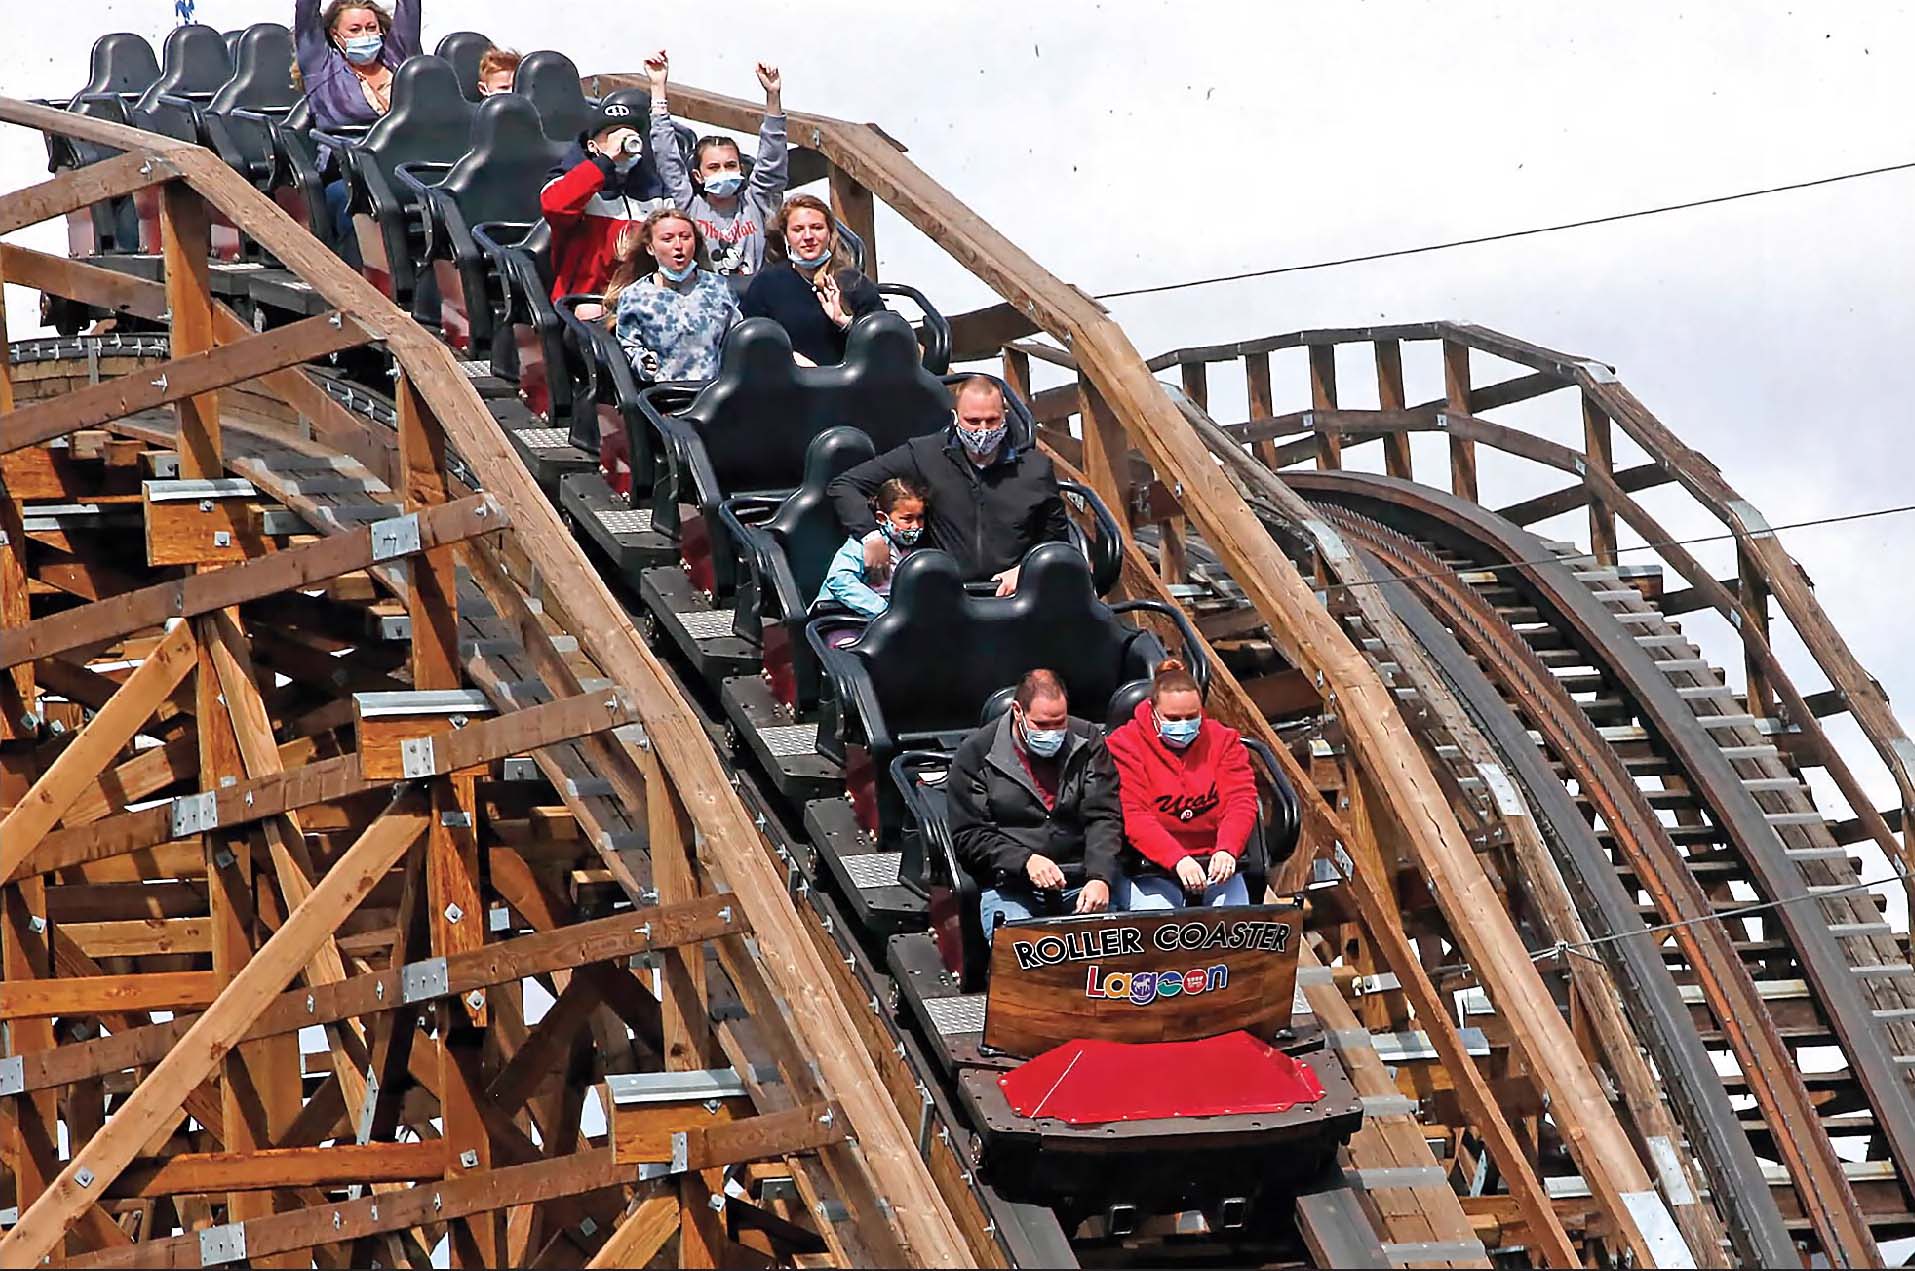 Rollercoaster at Lagoon amusement park in Utah, former employer of Nolan Bushnell